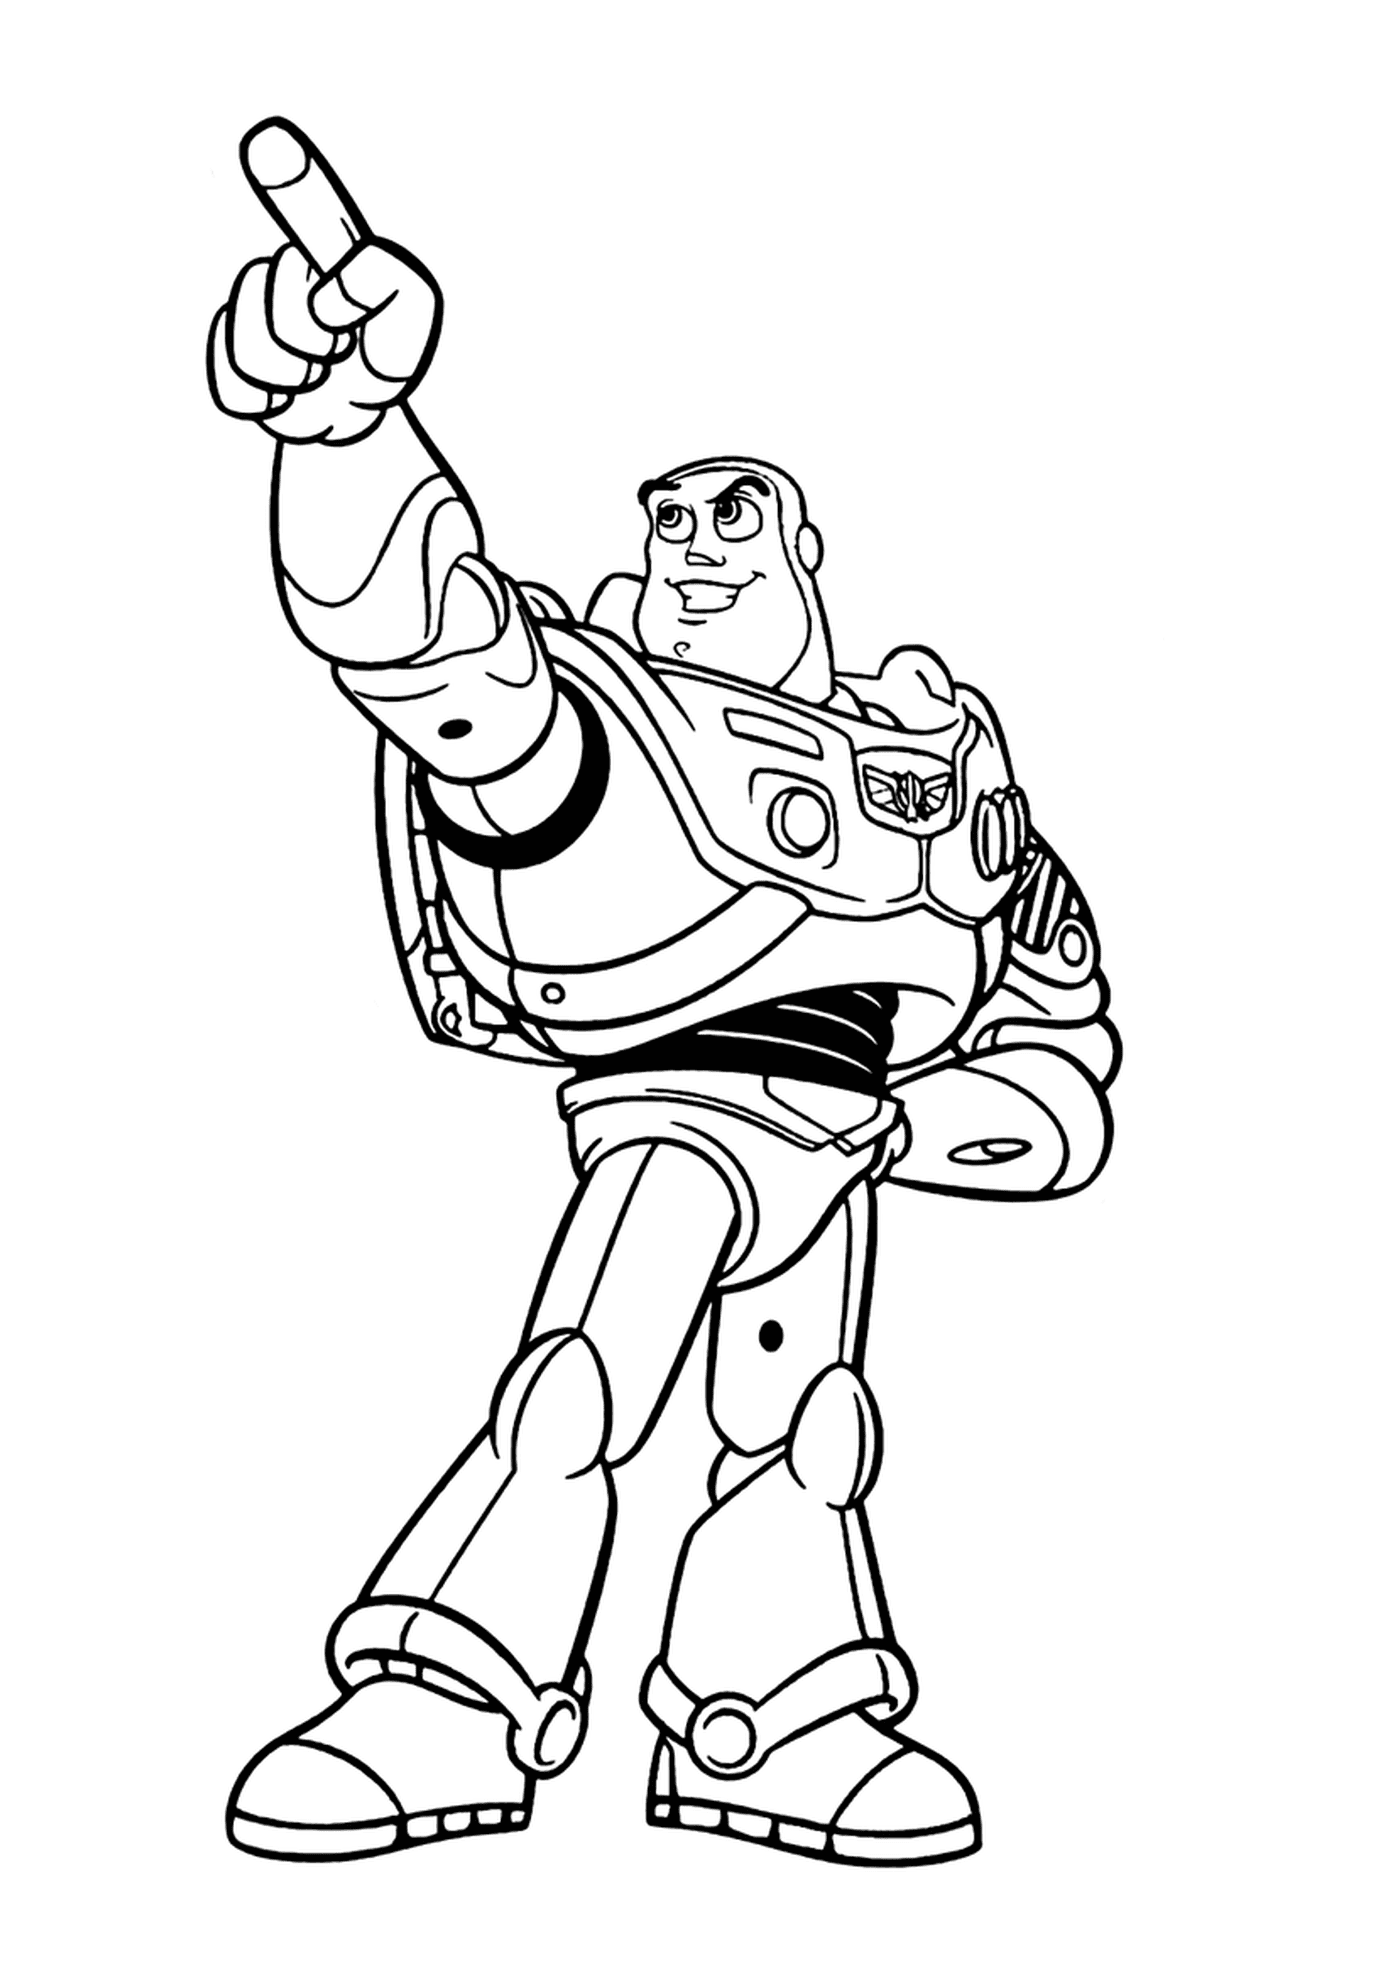  Buzz Lightyear, destemido campeão de estrelas 